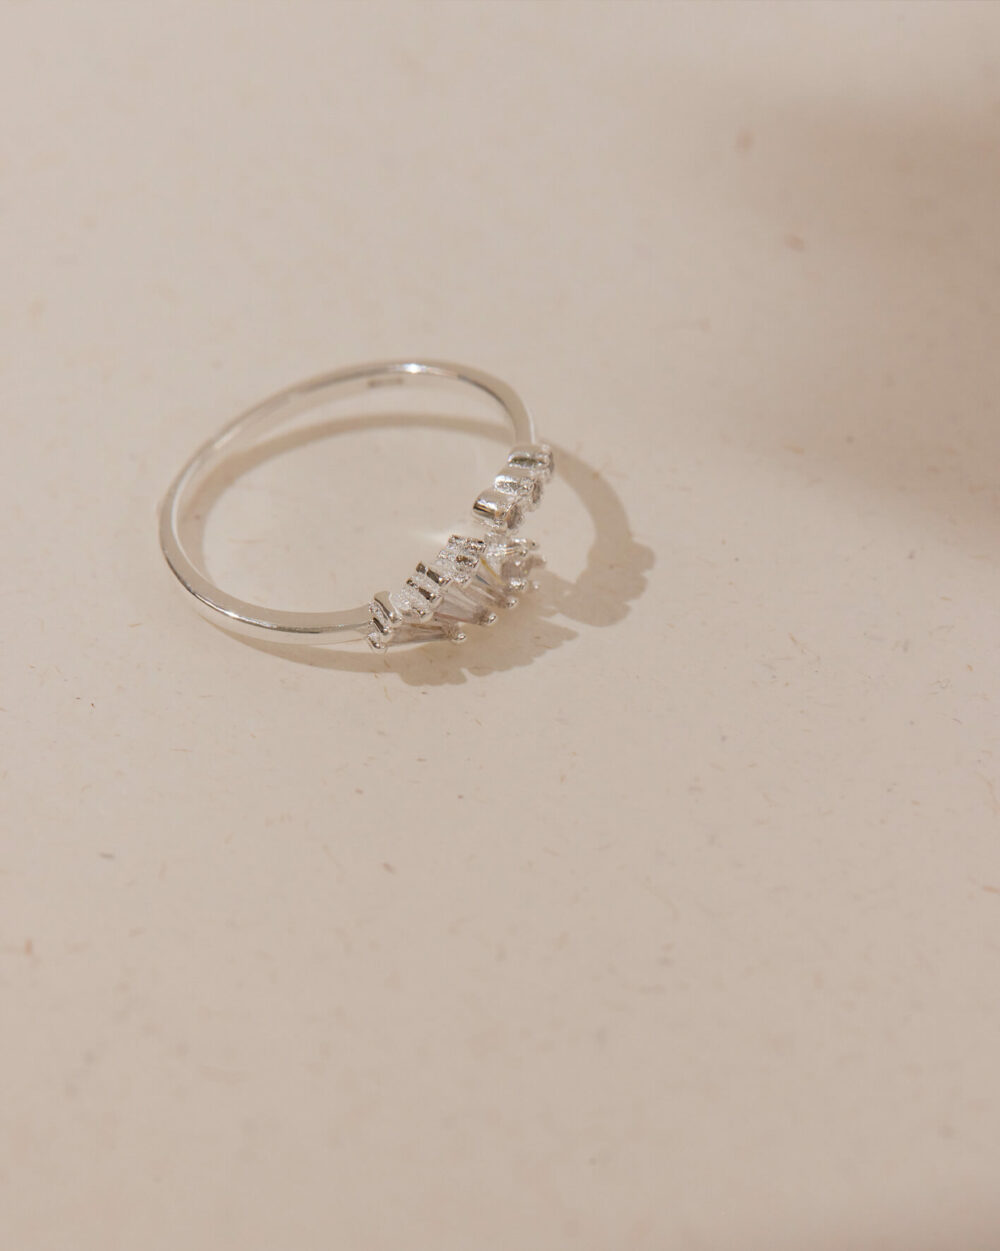 Eco安珂,韓國飾品,韓國戒指,韓國925純銀戒指,925純銀戒指,純銀戒指,排鑽純銀戒指